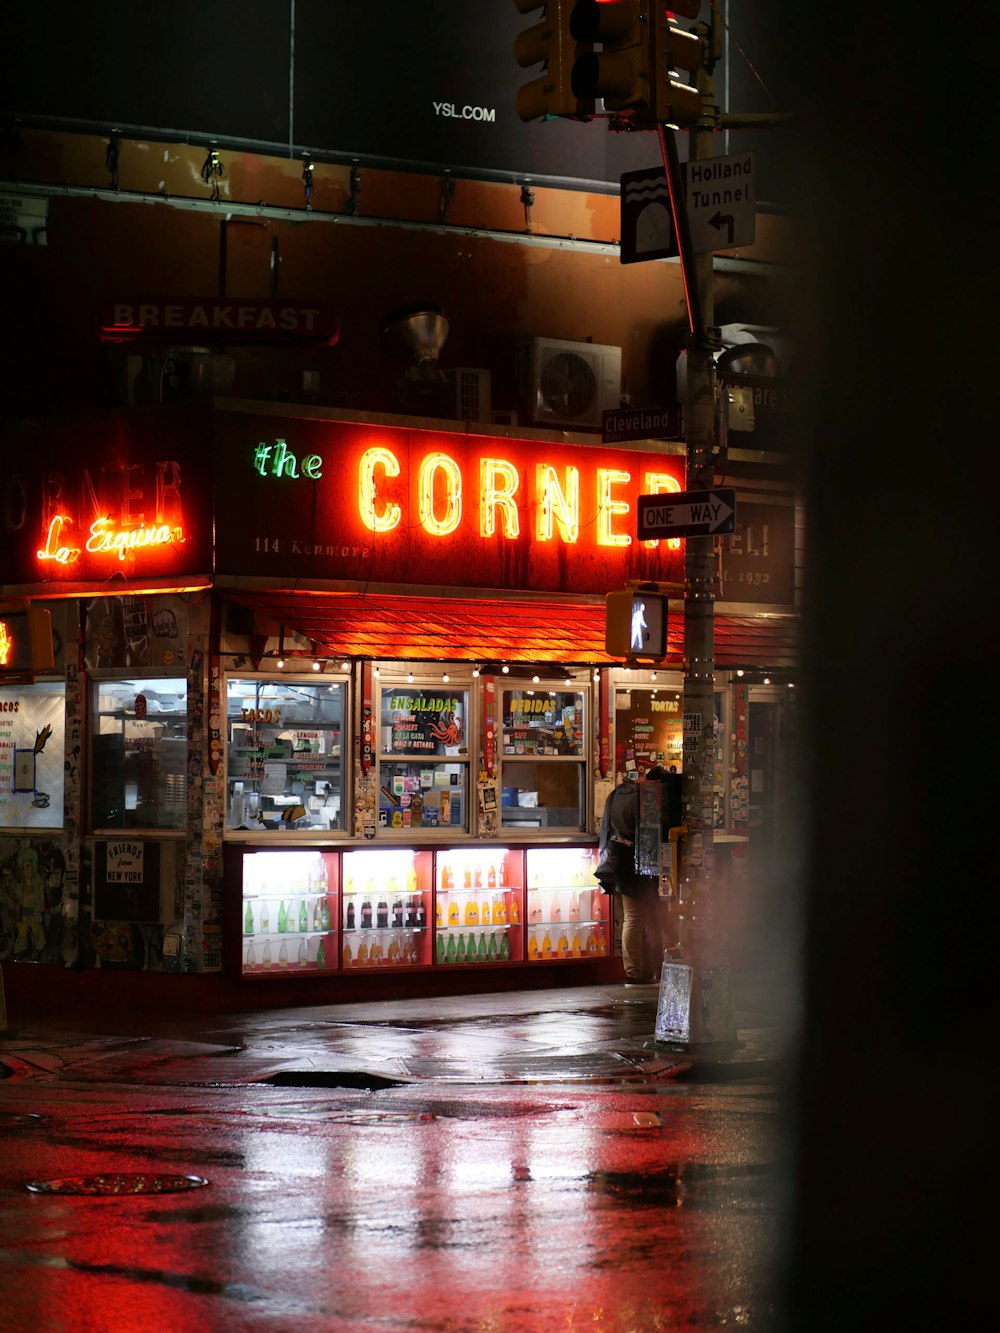 a corner store on a rainy night in the rain